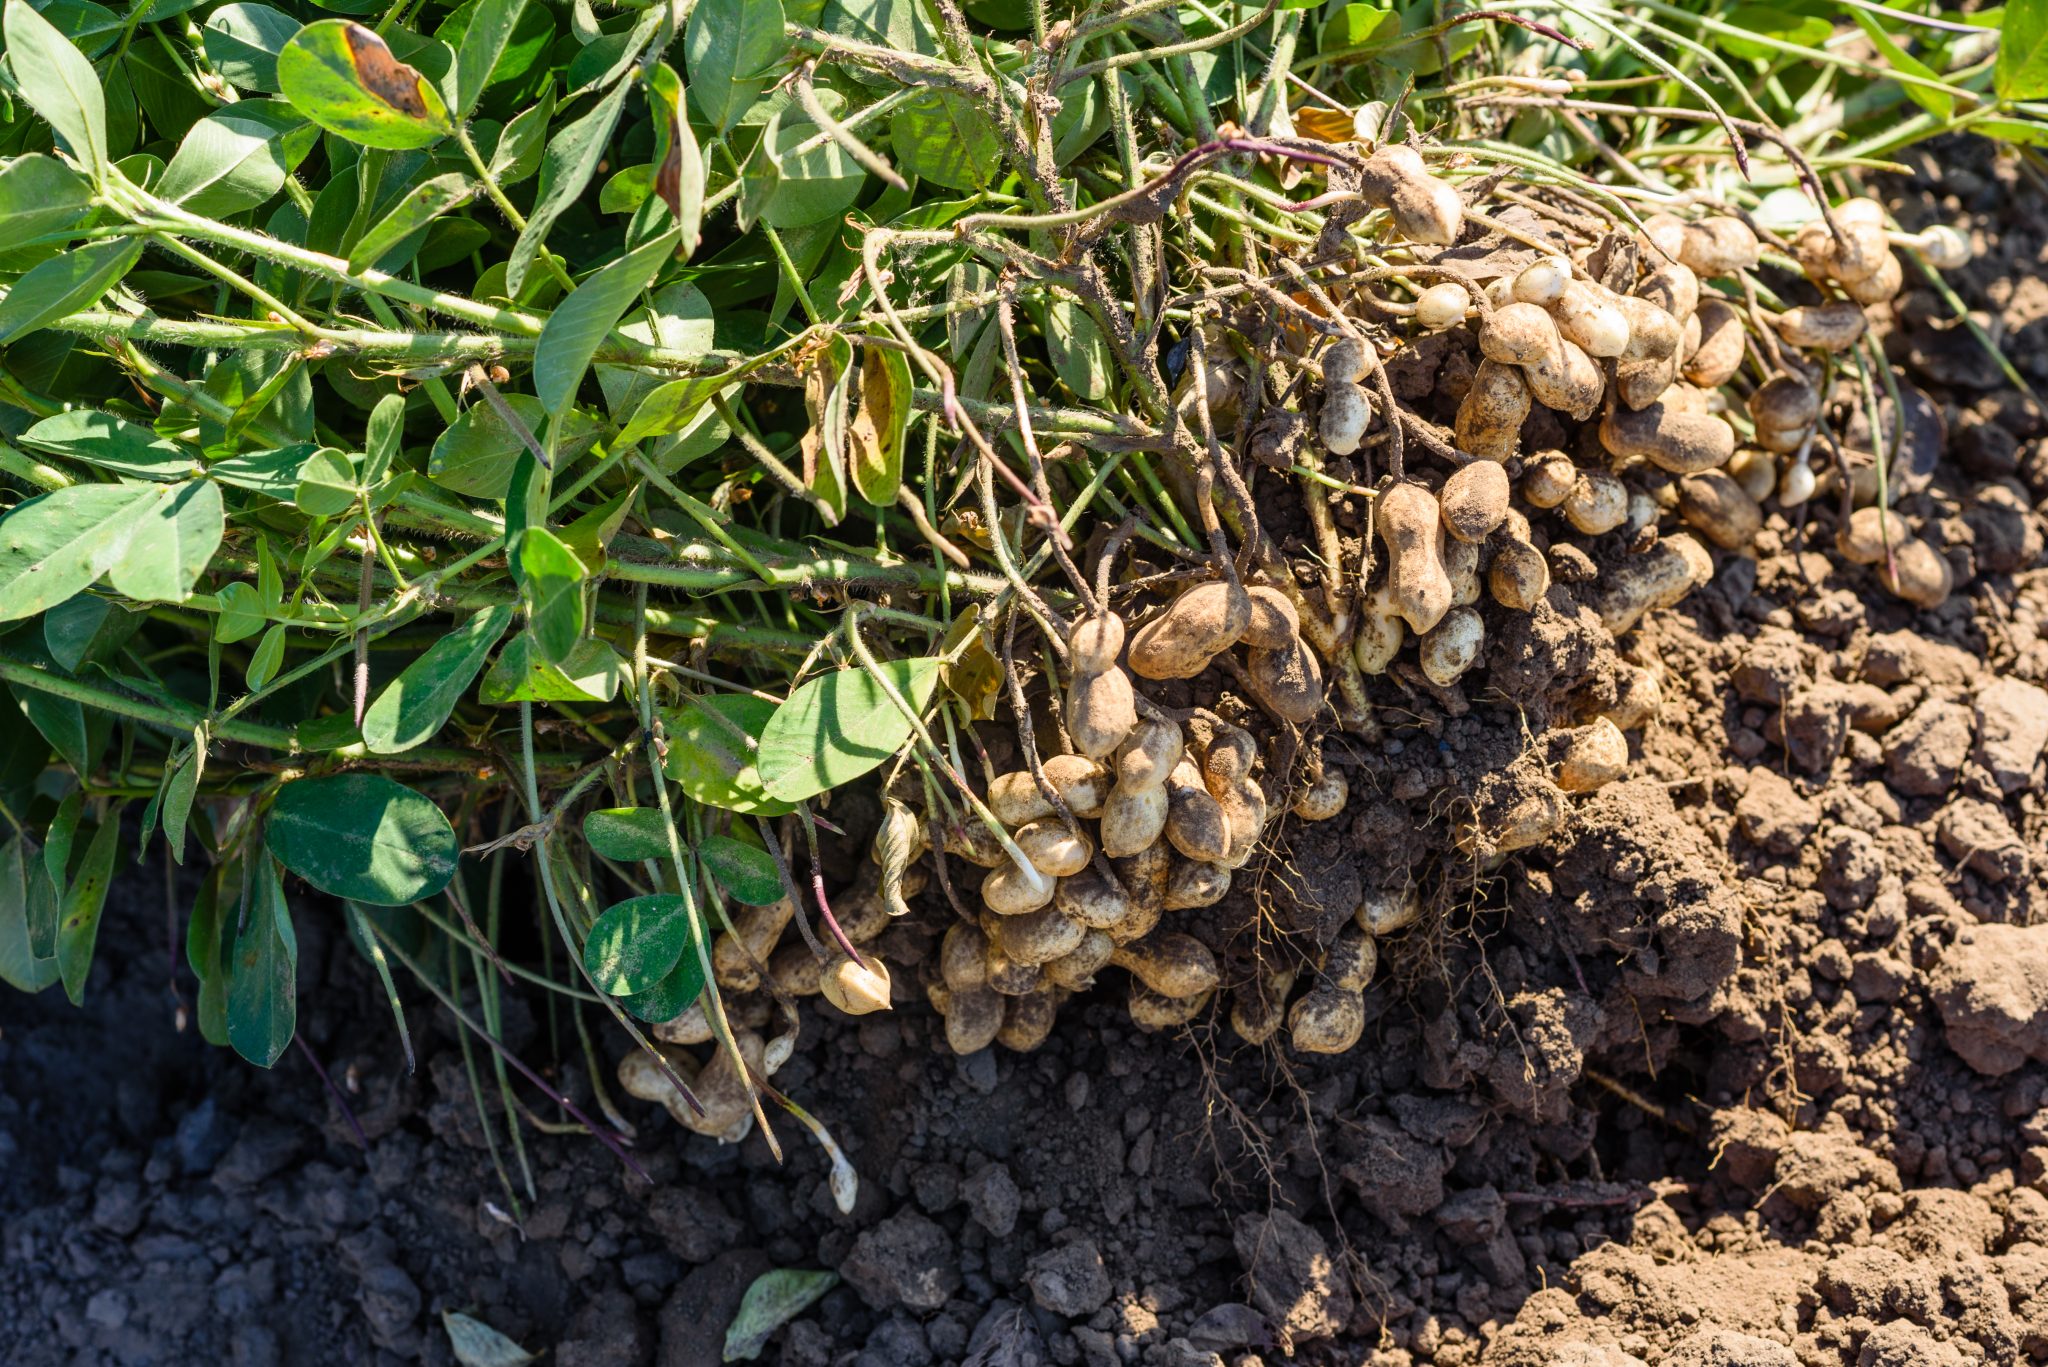 Dug peanuts in a field